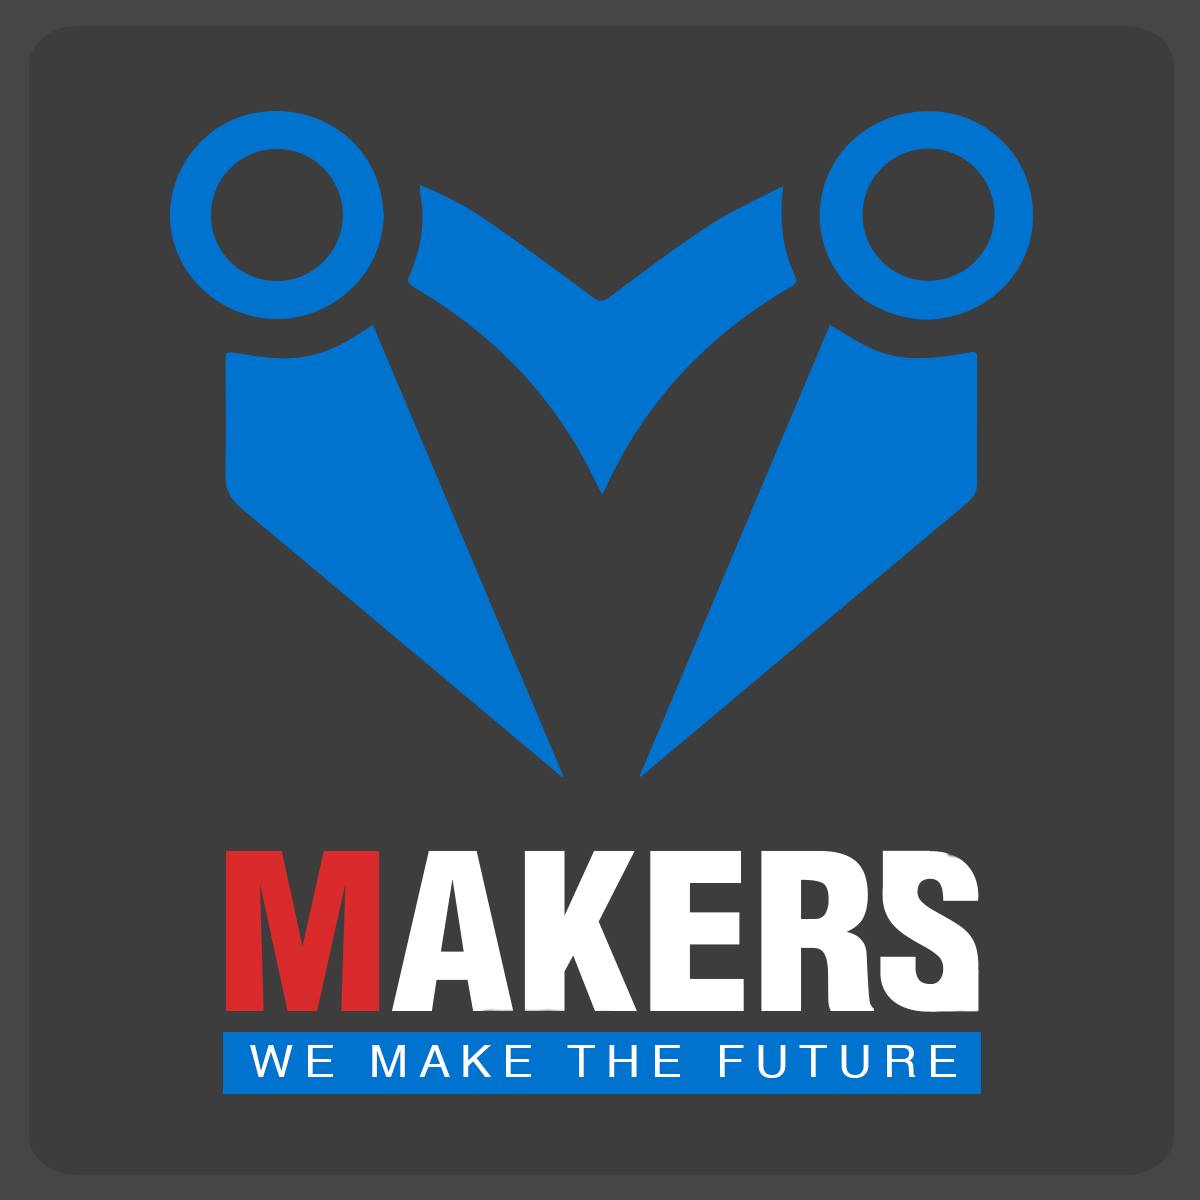 ميكرز إليكترونكس Makers Electronics